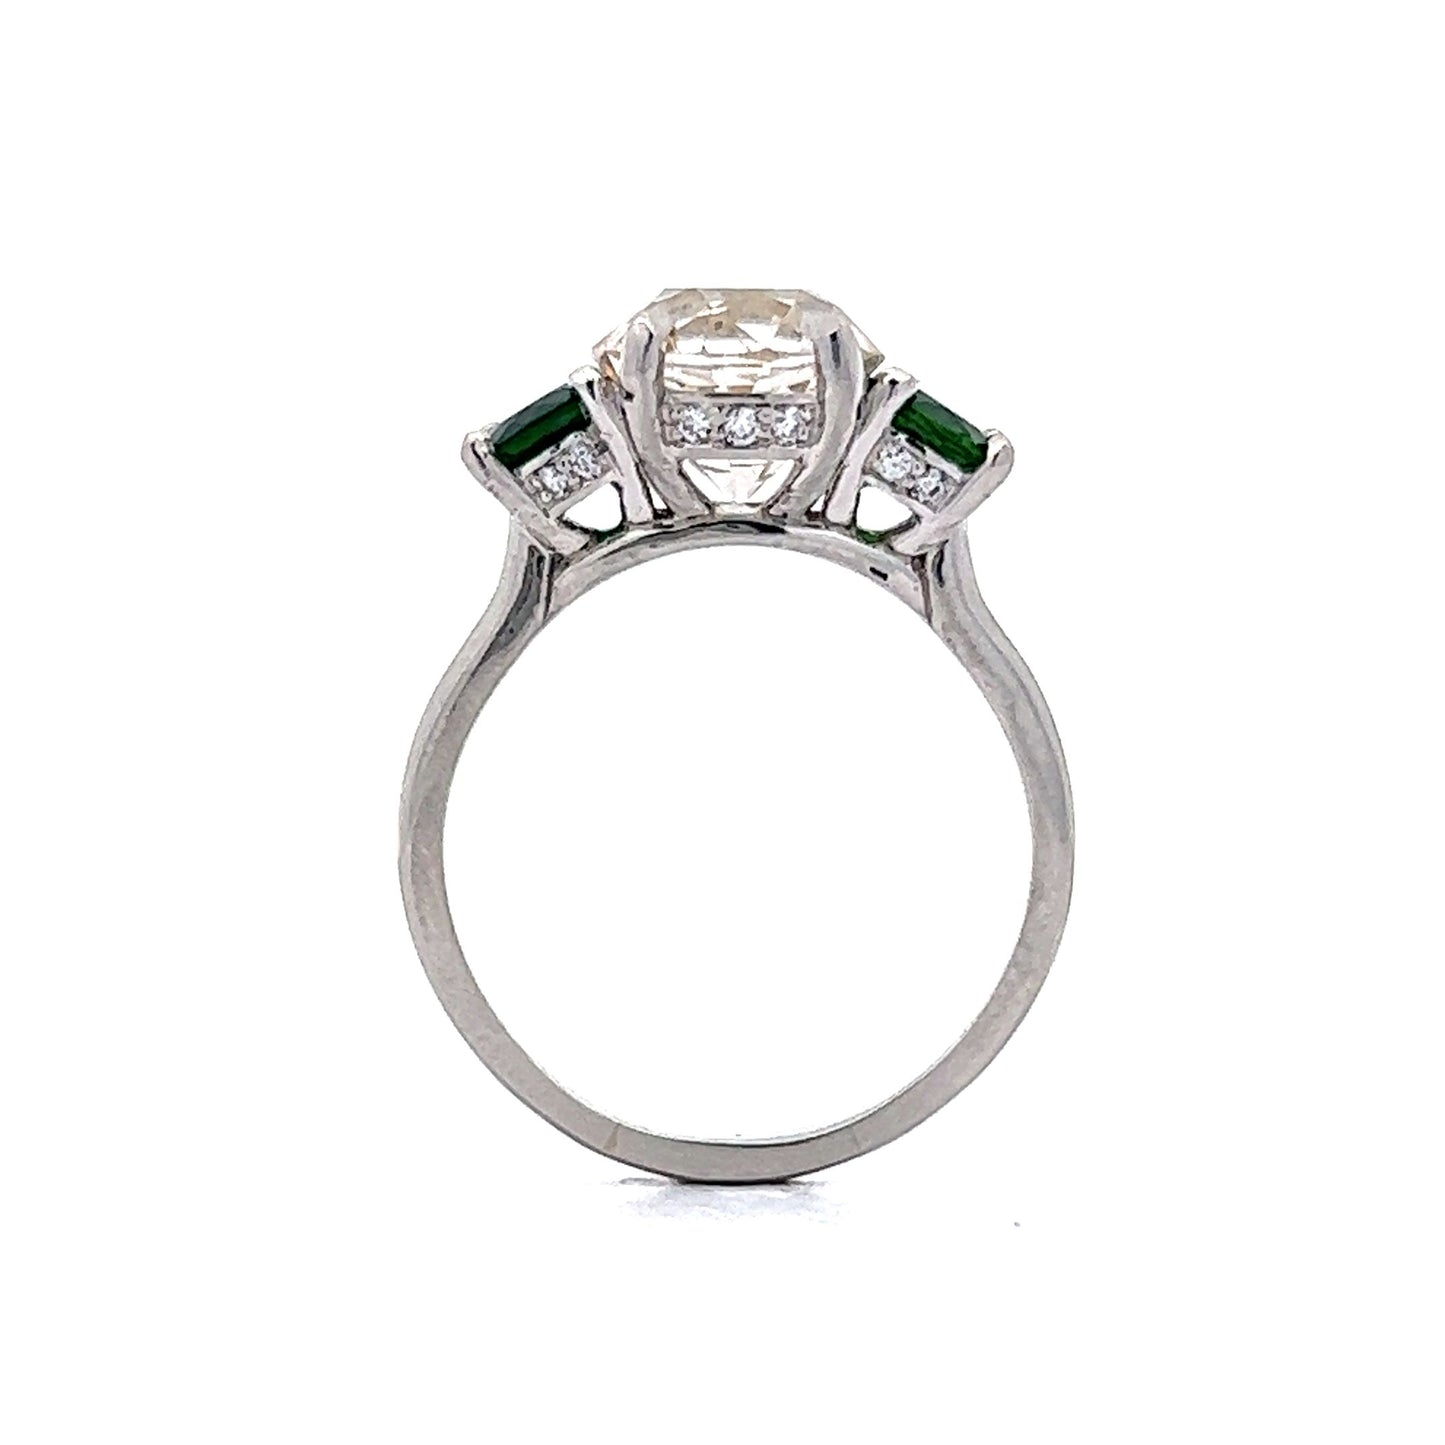 2.85 Old Euro Engagement Ring in Platinum